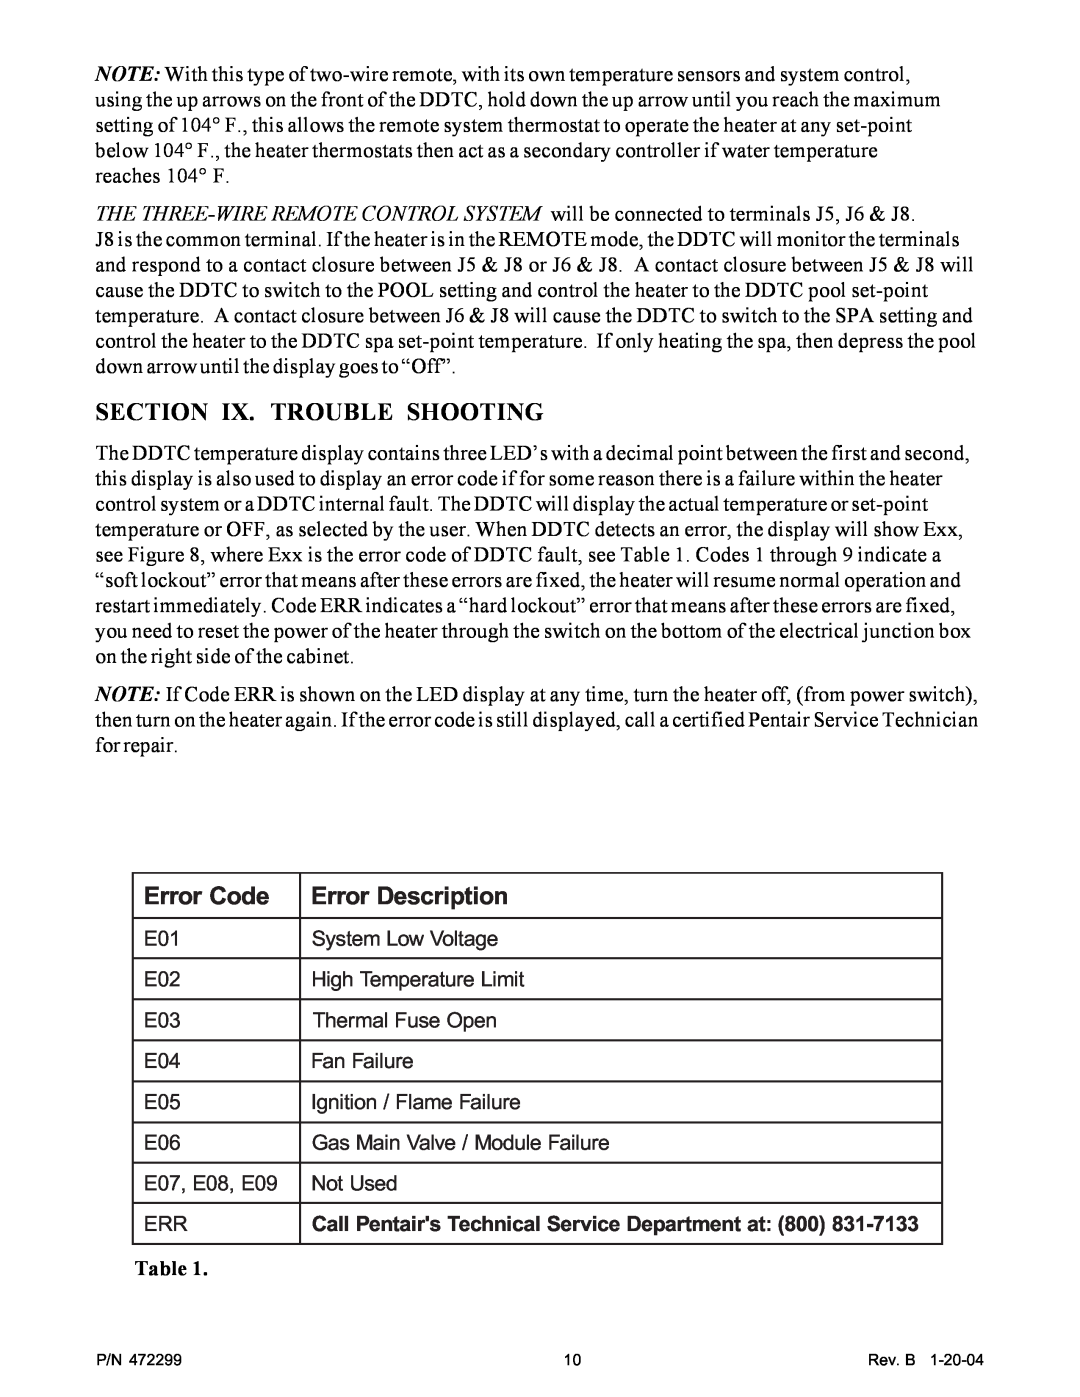 Pentair MiniMax NT Heater important safety instructions Section Ix. Trouble Shooting, Error Code, Error Description 